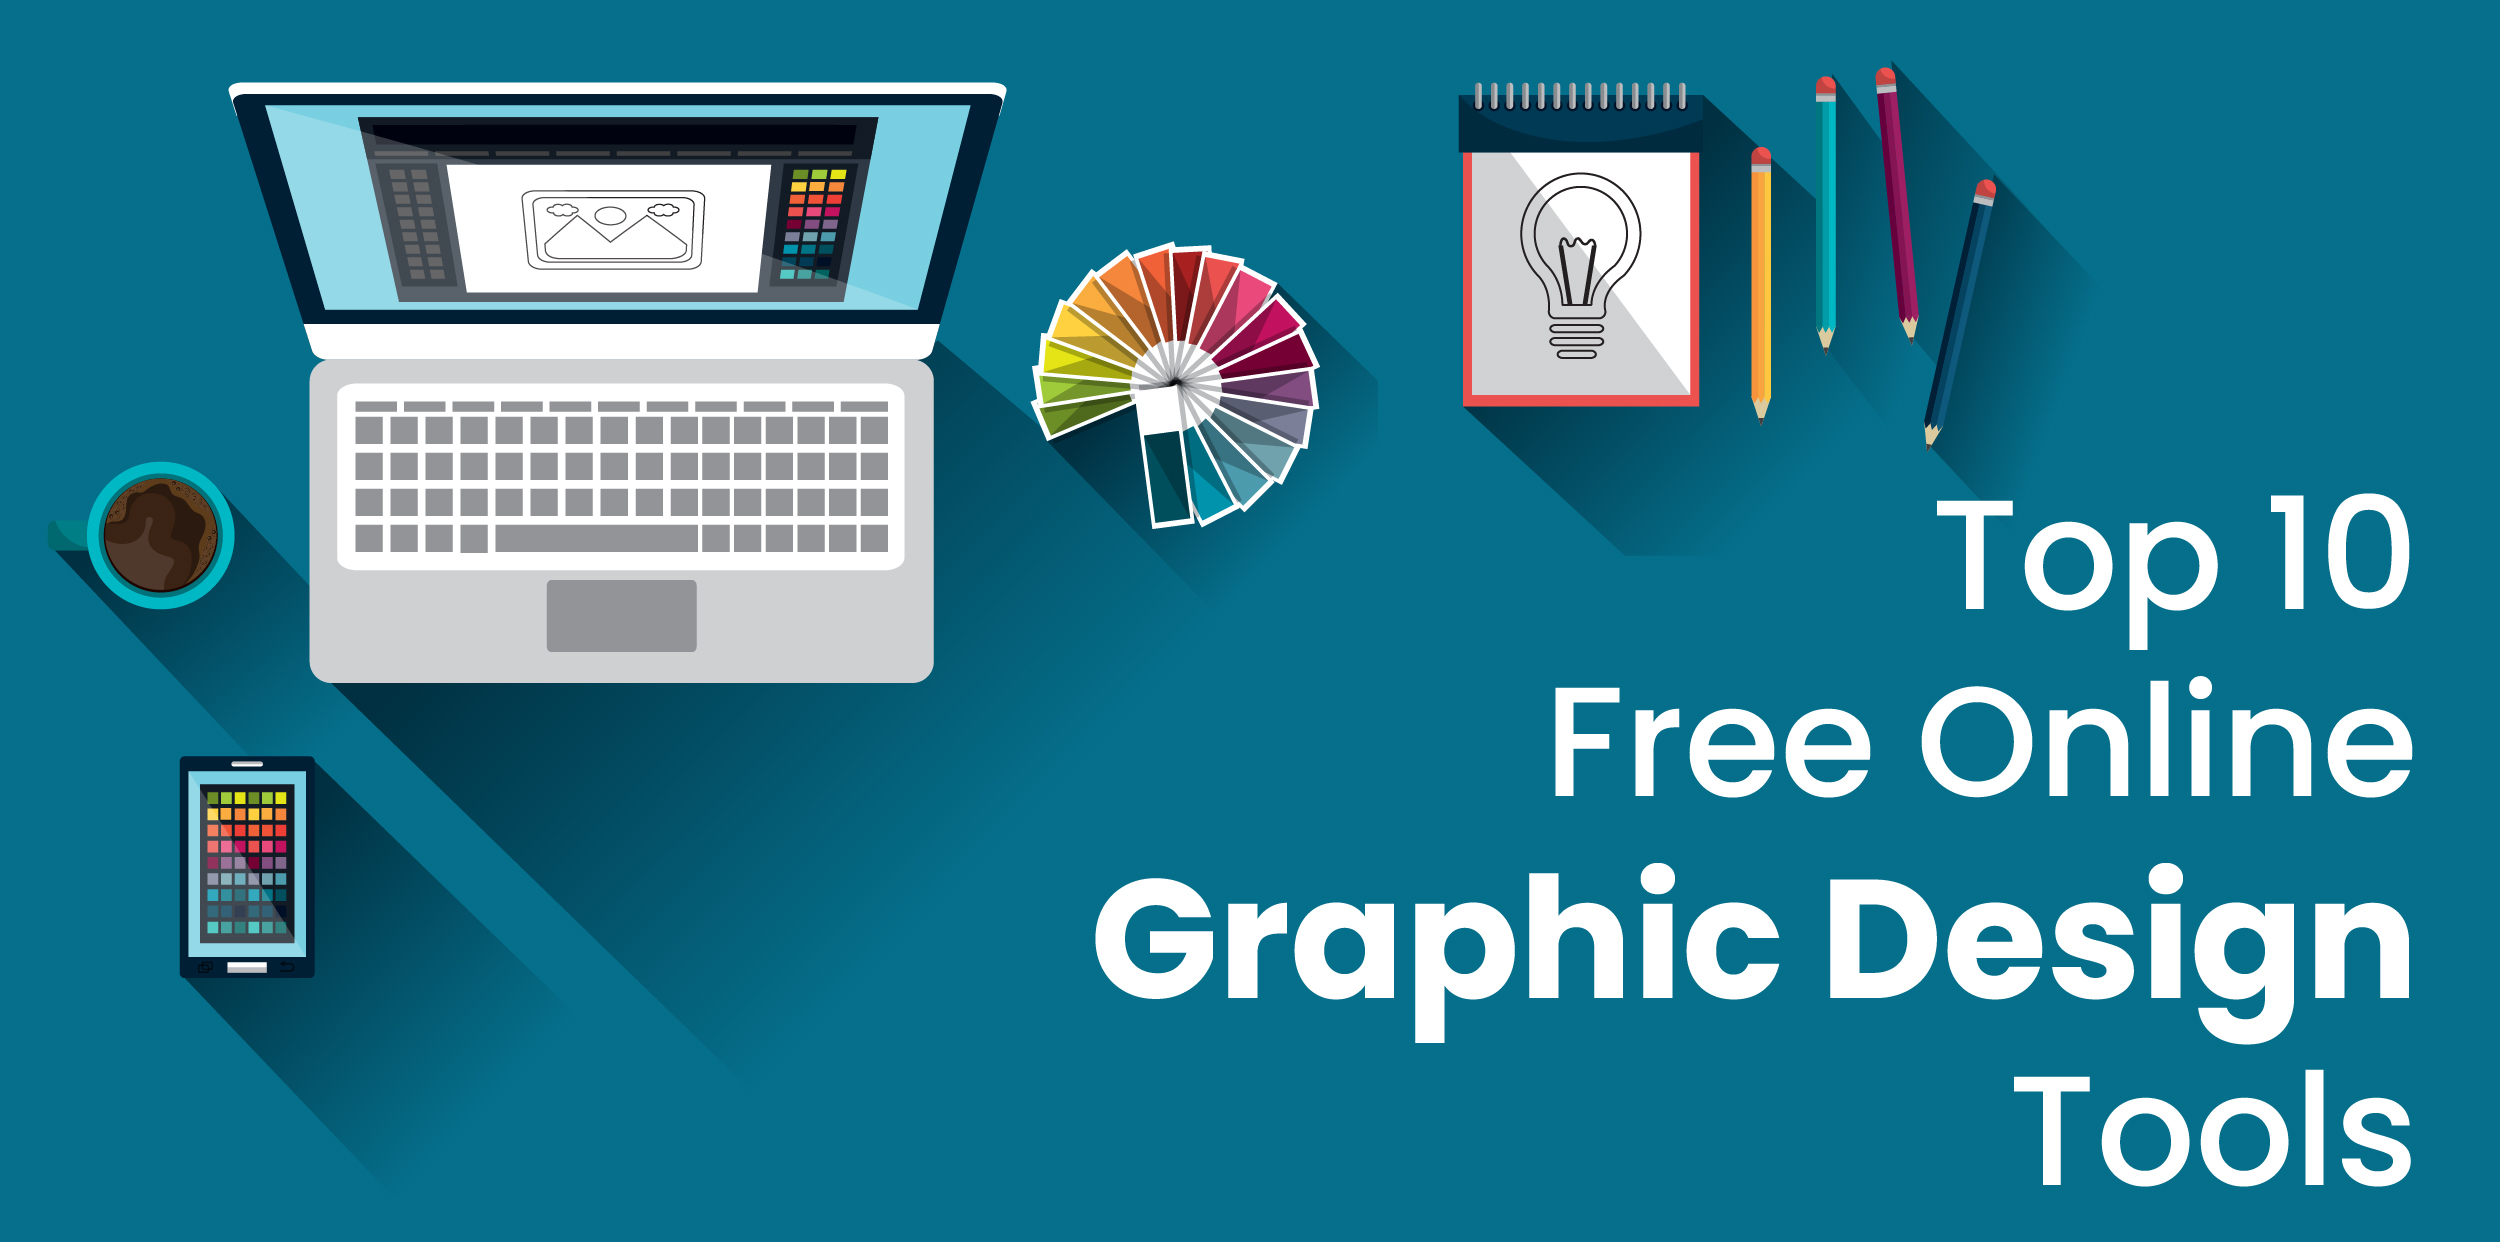 Top 10 Free Online Graphic Design Tools